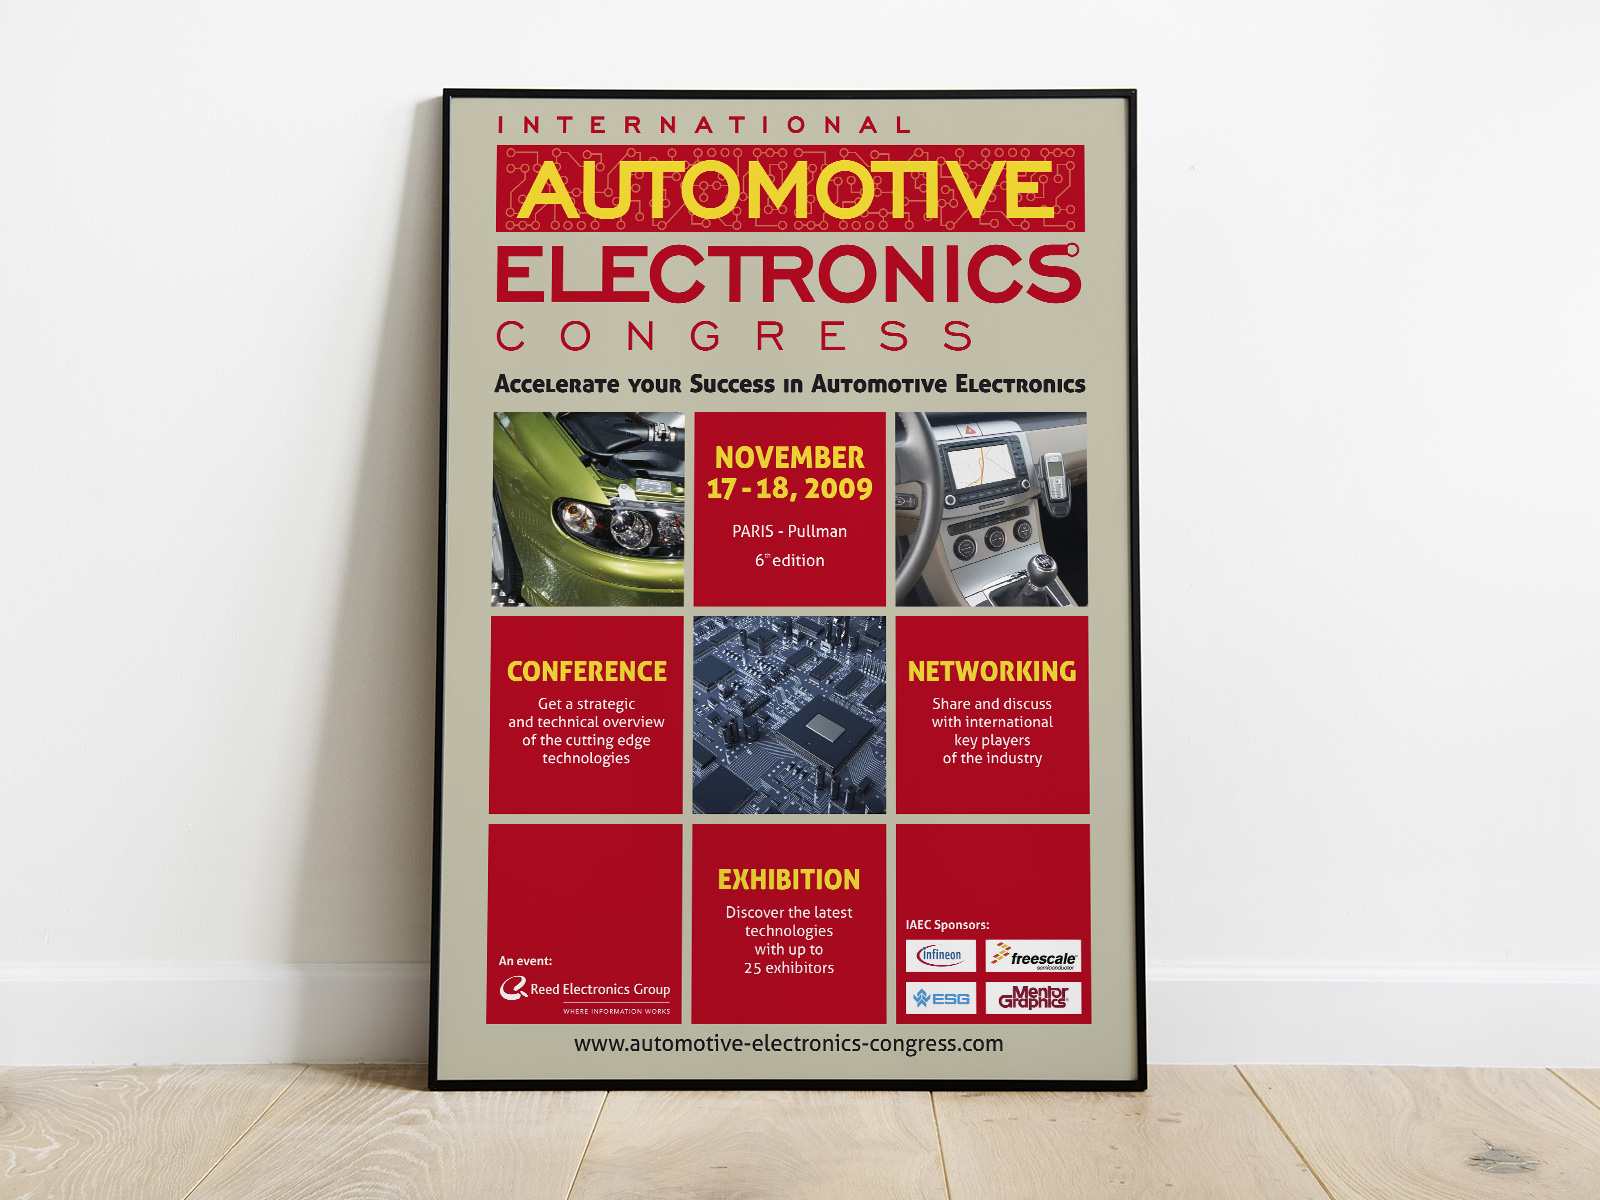 Automotive Electronics